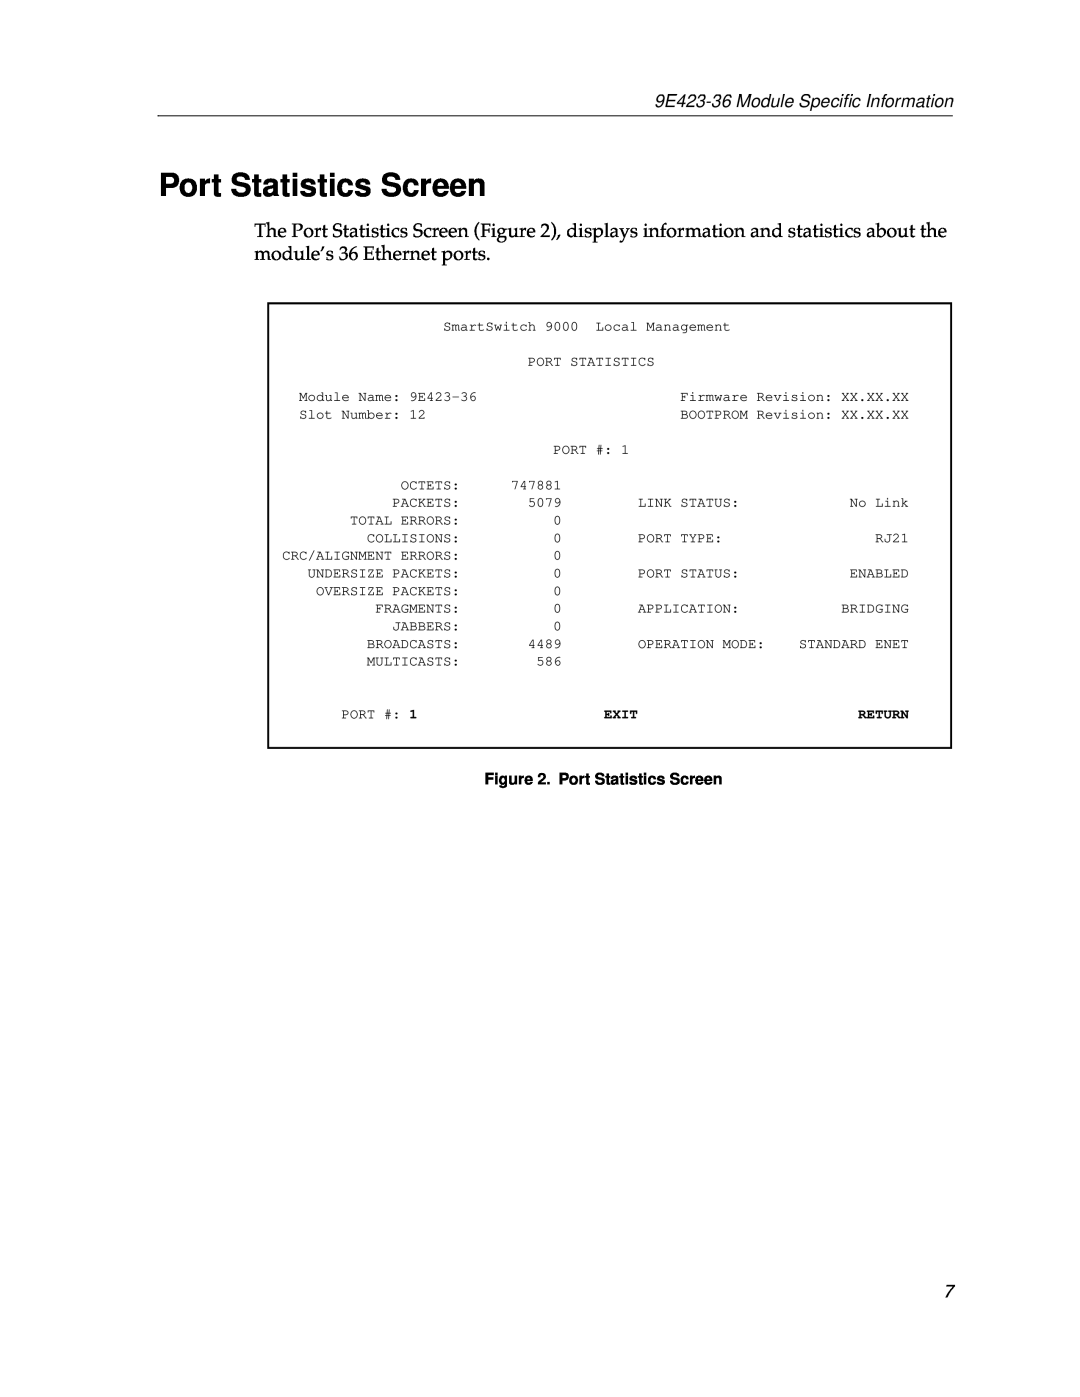 Cabletron Systems appendix Port Statistics Screen, 9E423-36 Module Speciﬁc Information 